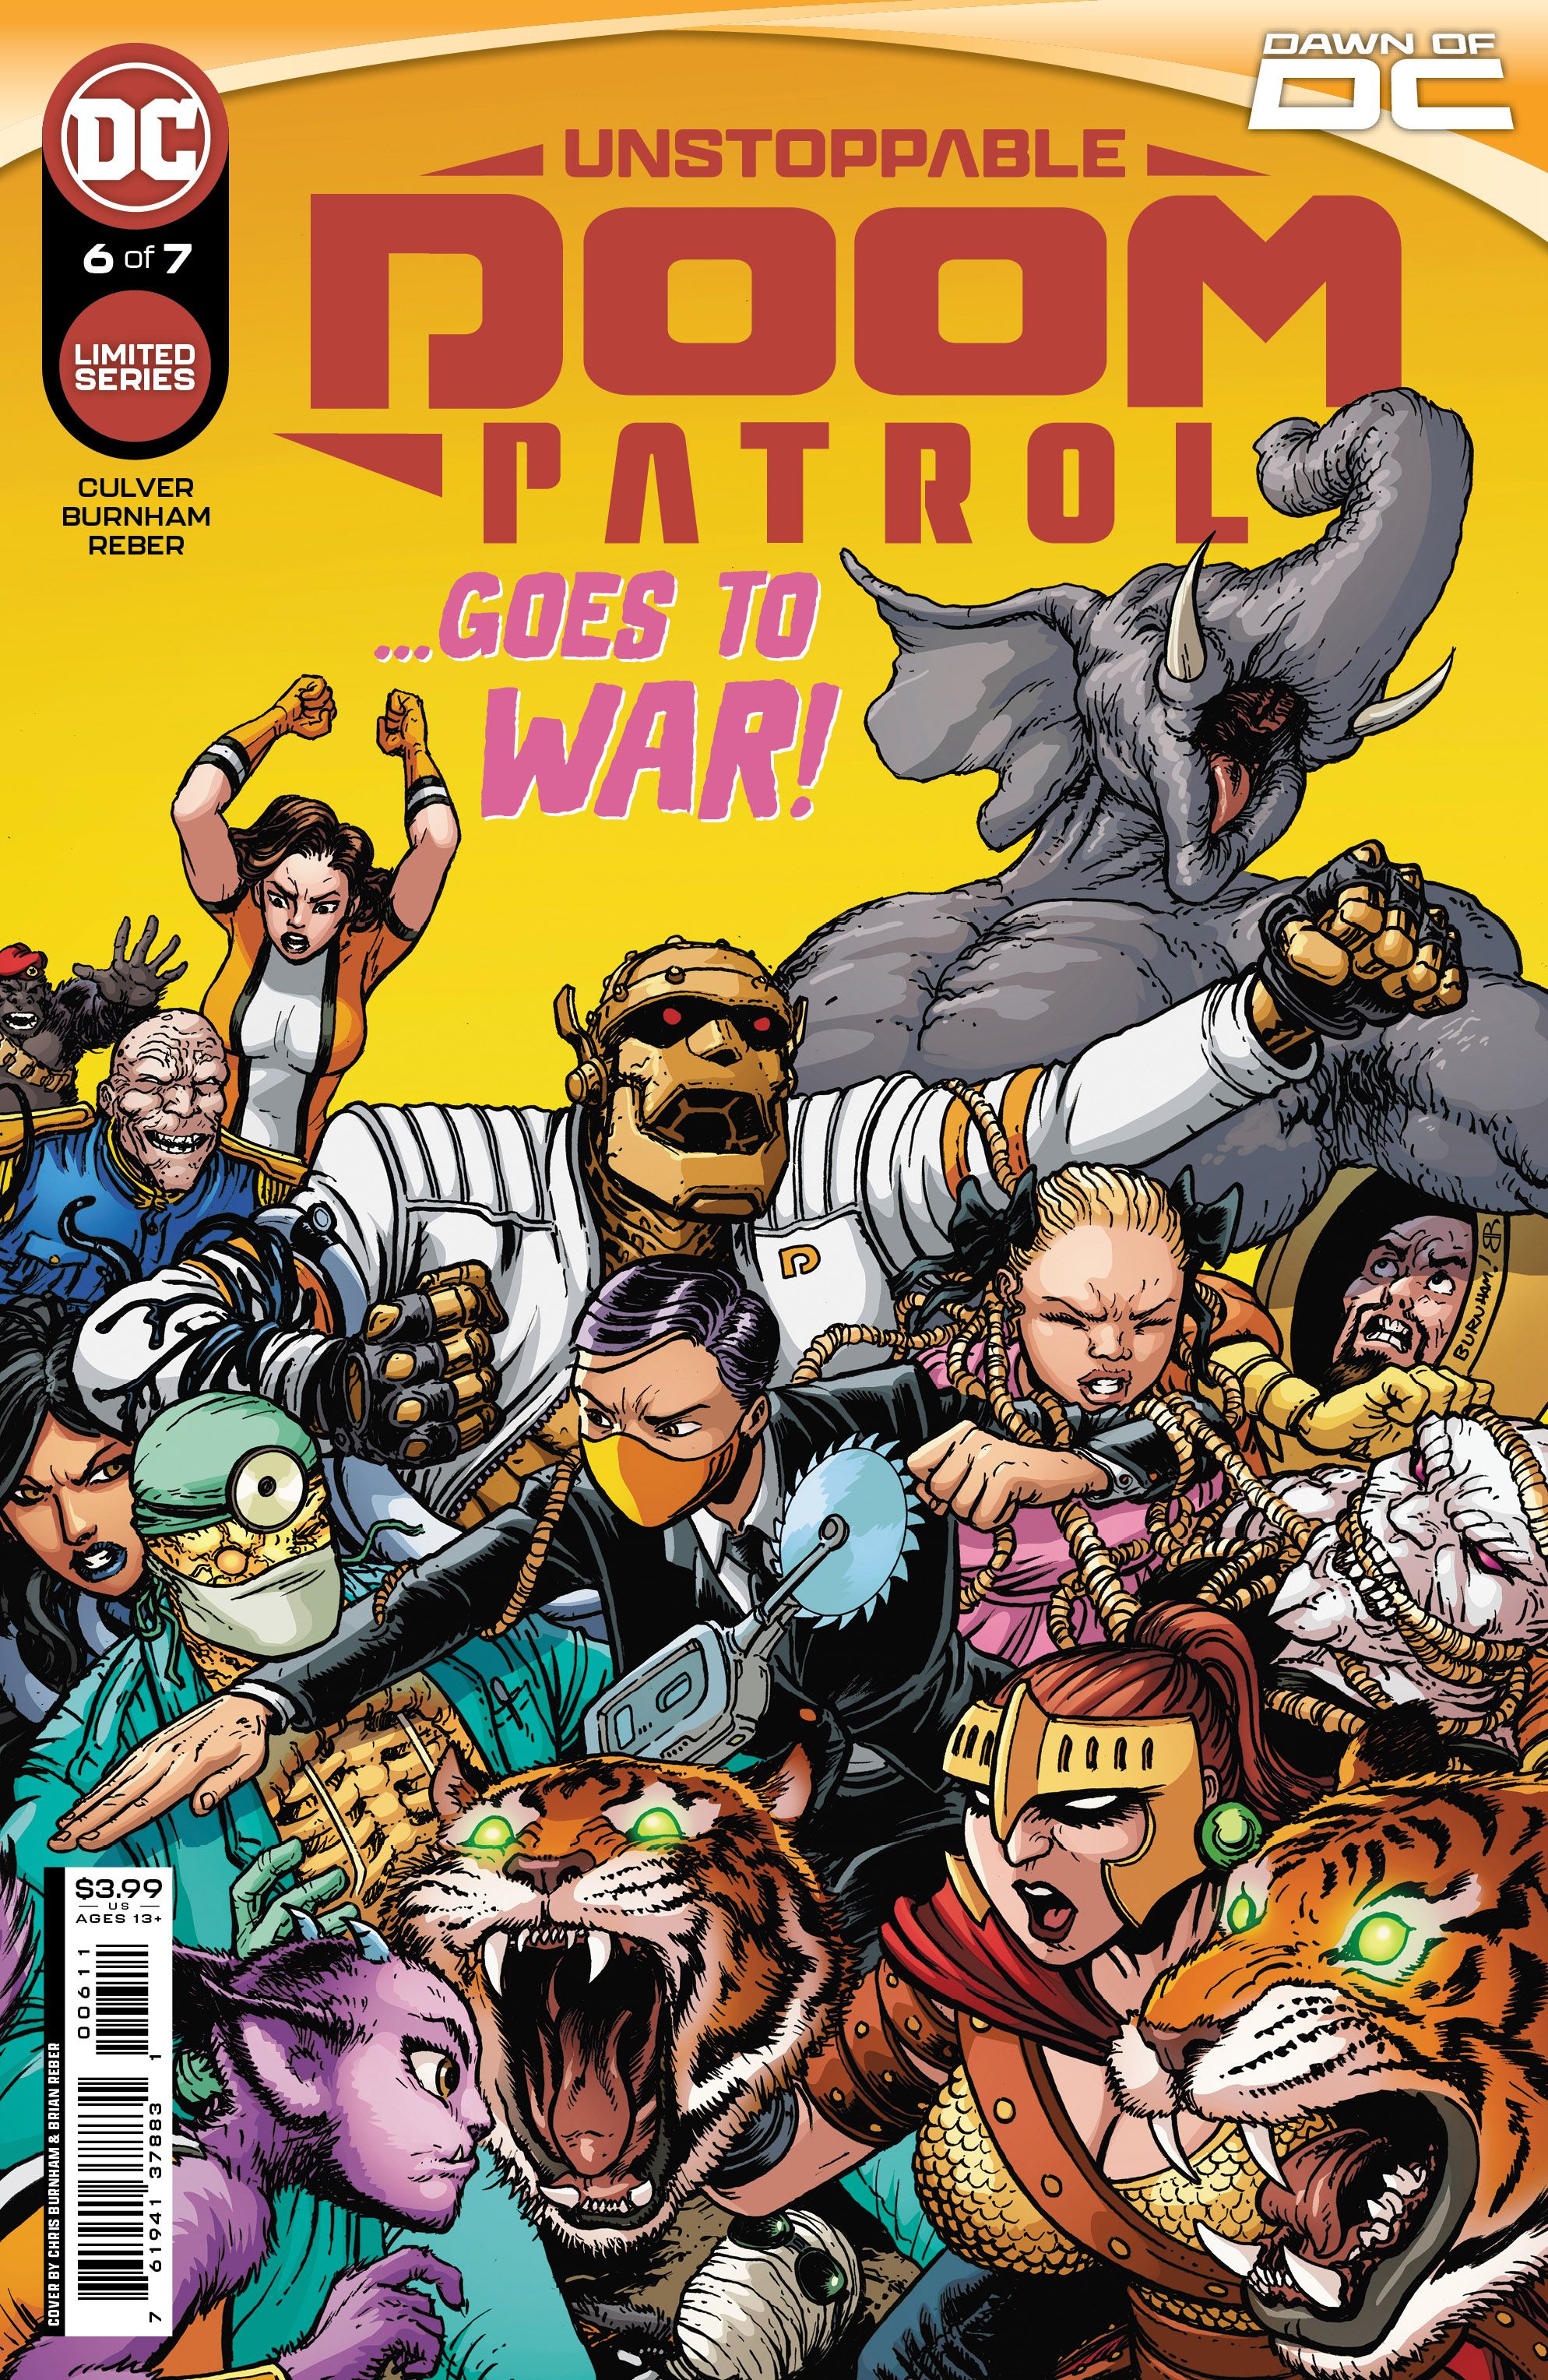 Unstoppable Doom Patrol #6 Comic